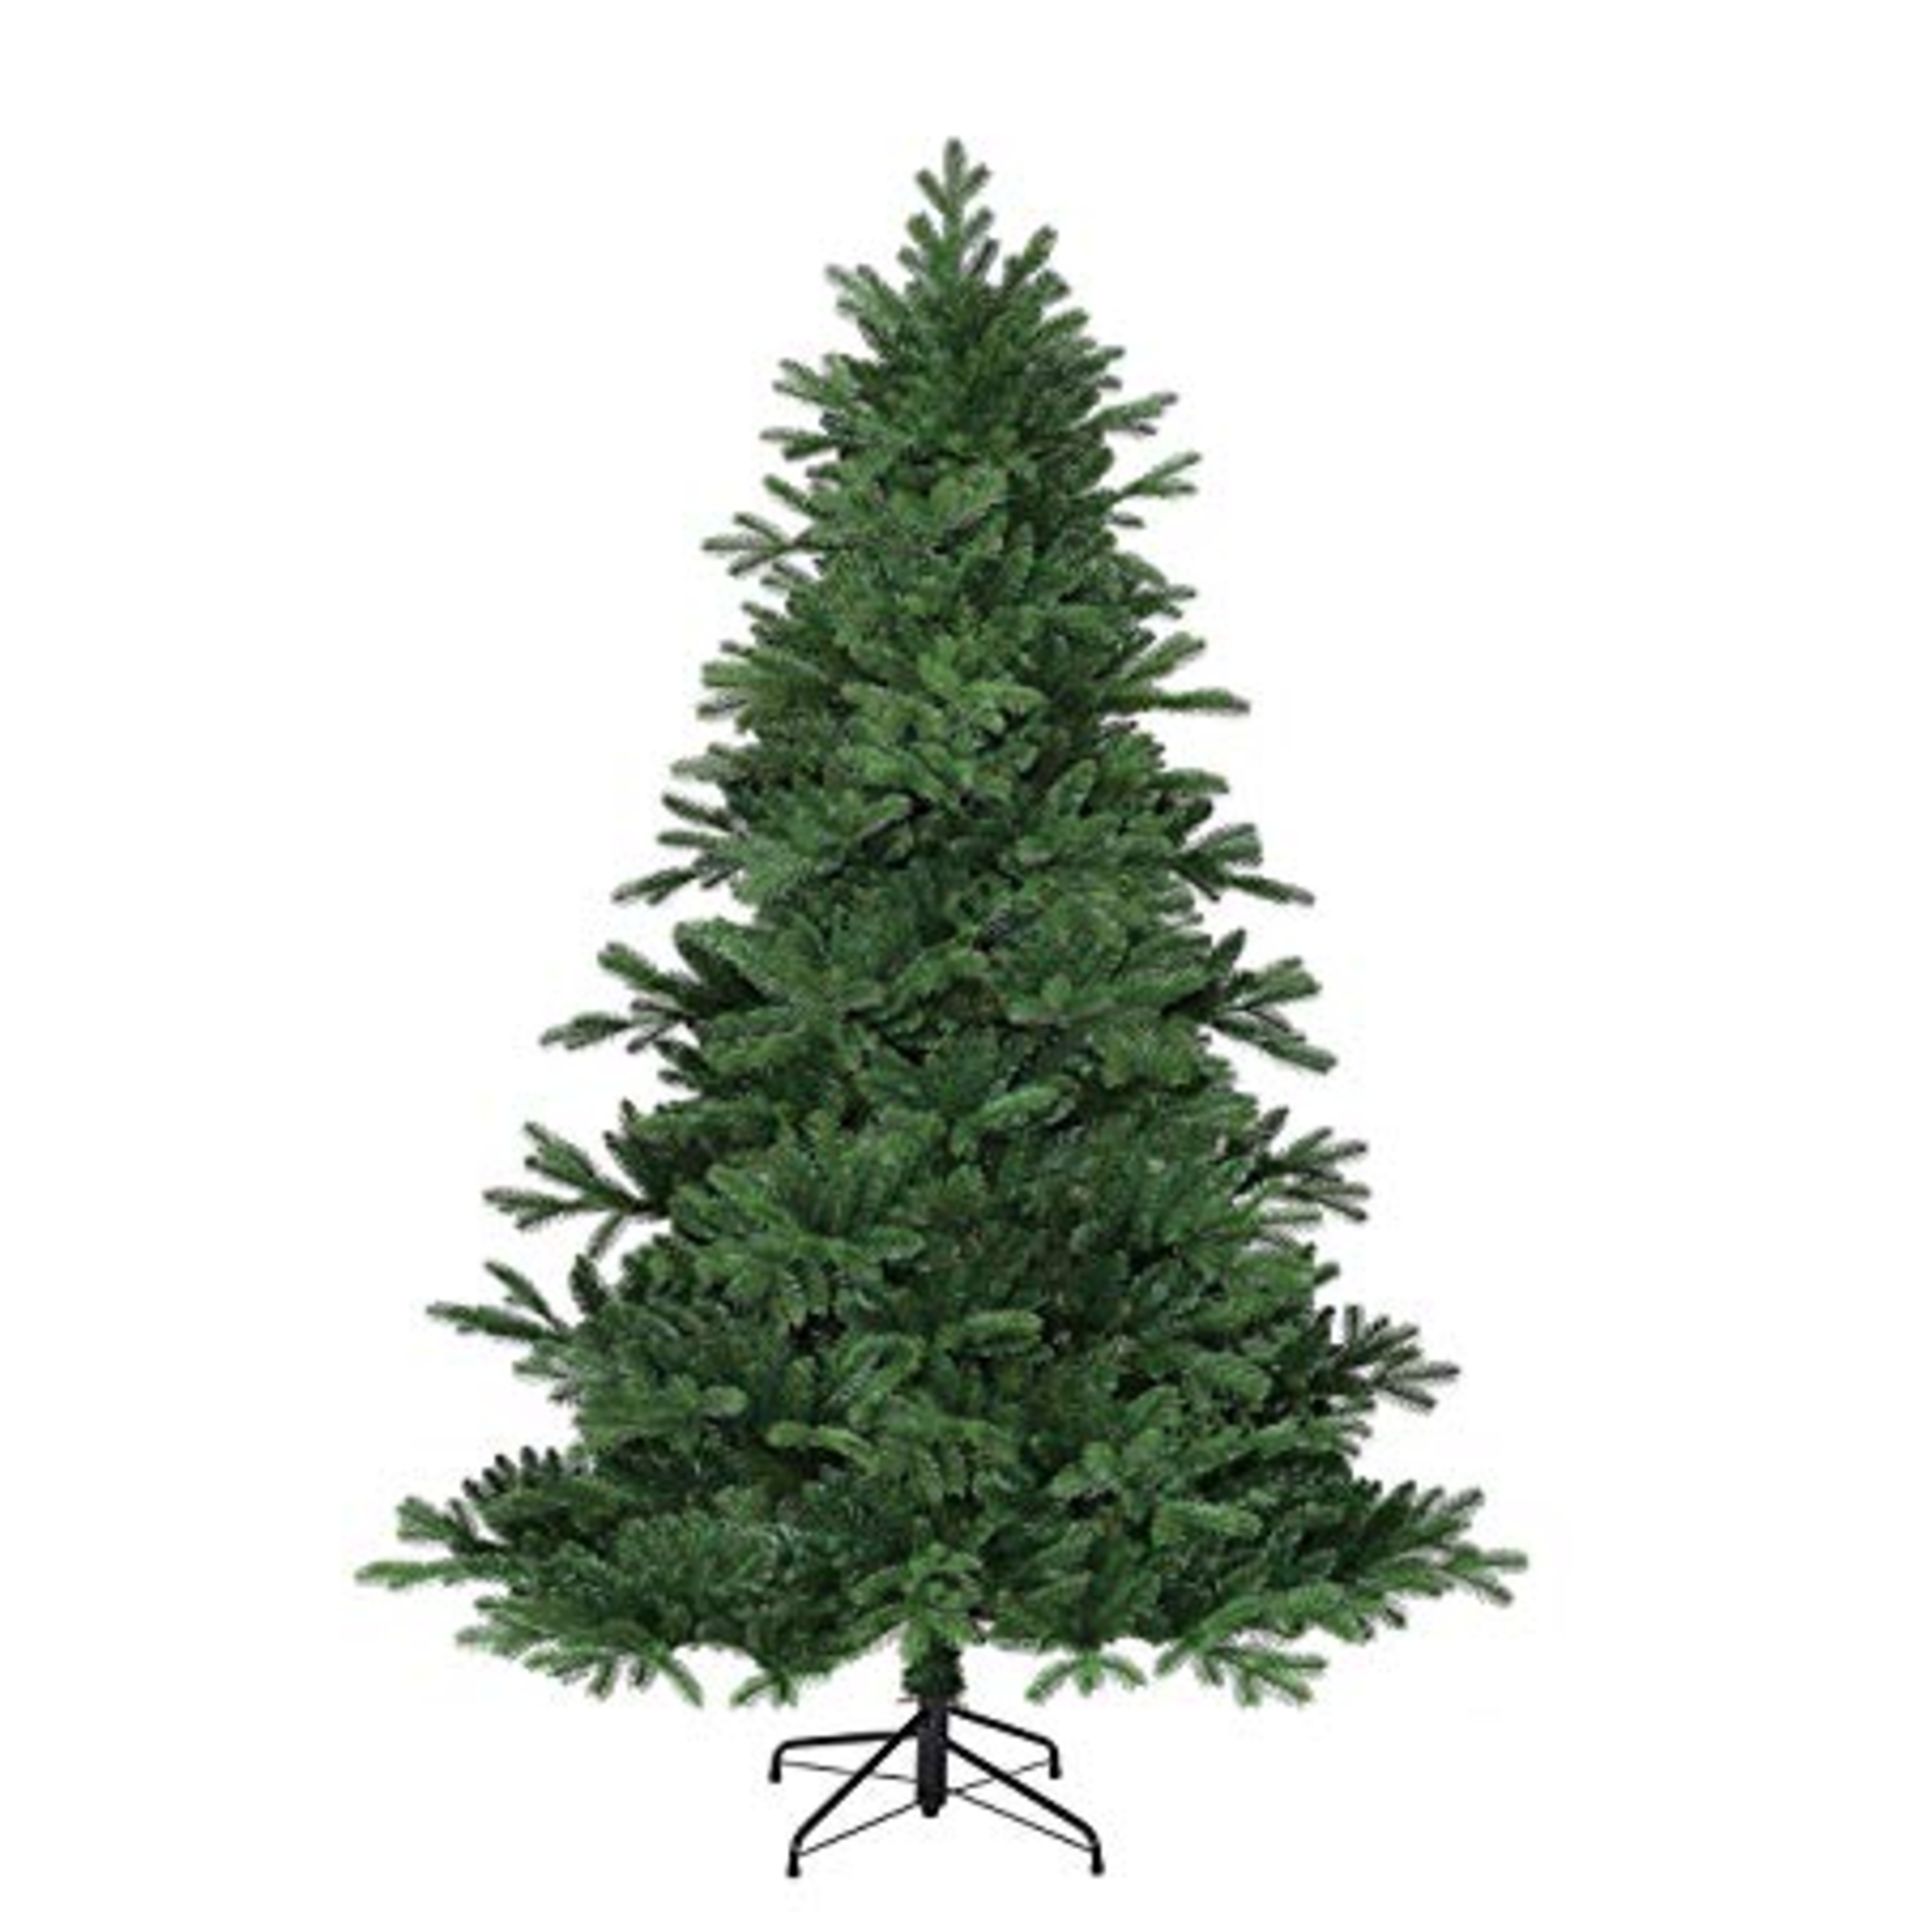 V Brand New 210CM Life Like Mixed Christmas Tree With Metal Stand